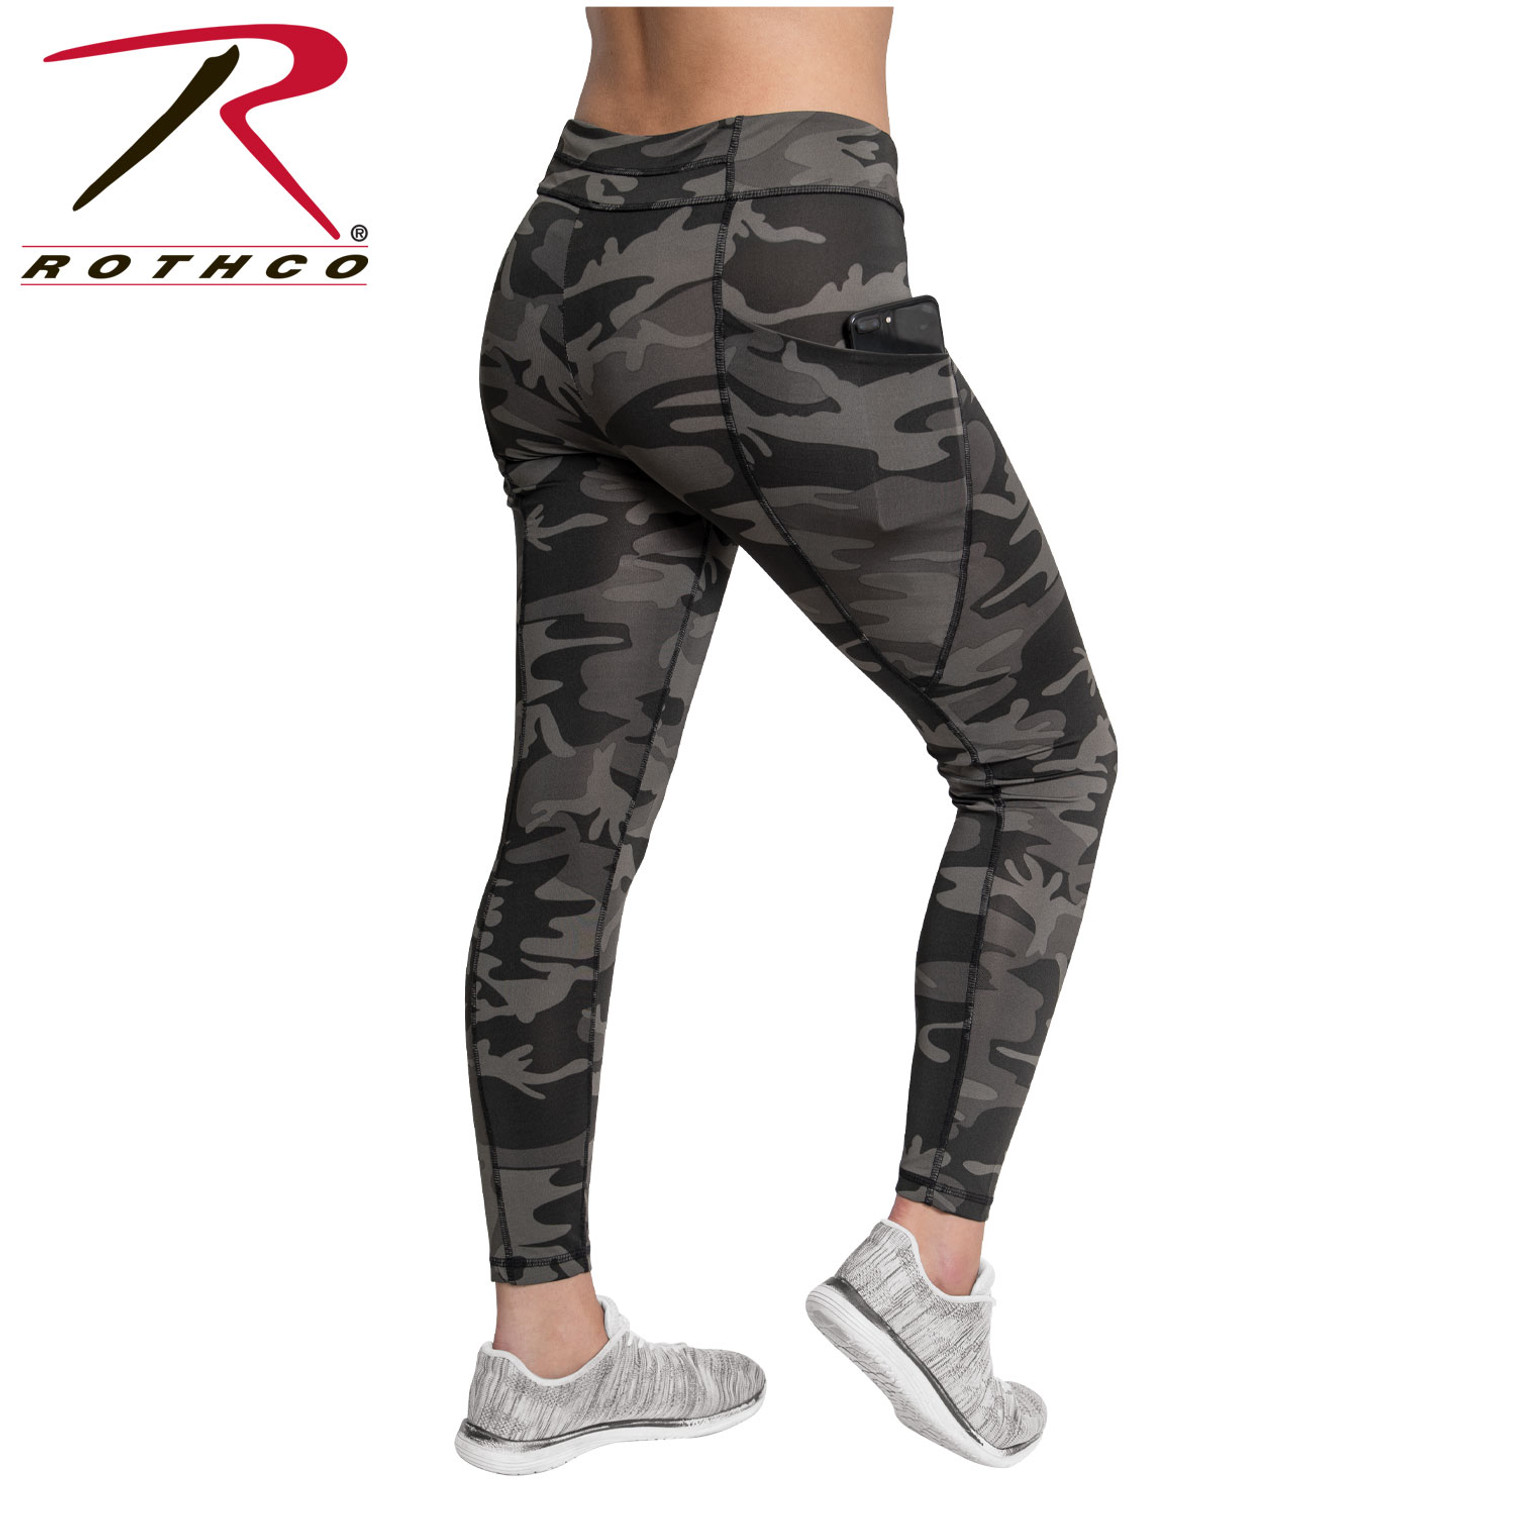 Rothco® - Women's Workout Performance Legging Shorts 